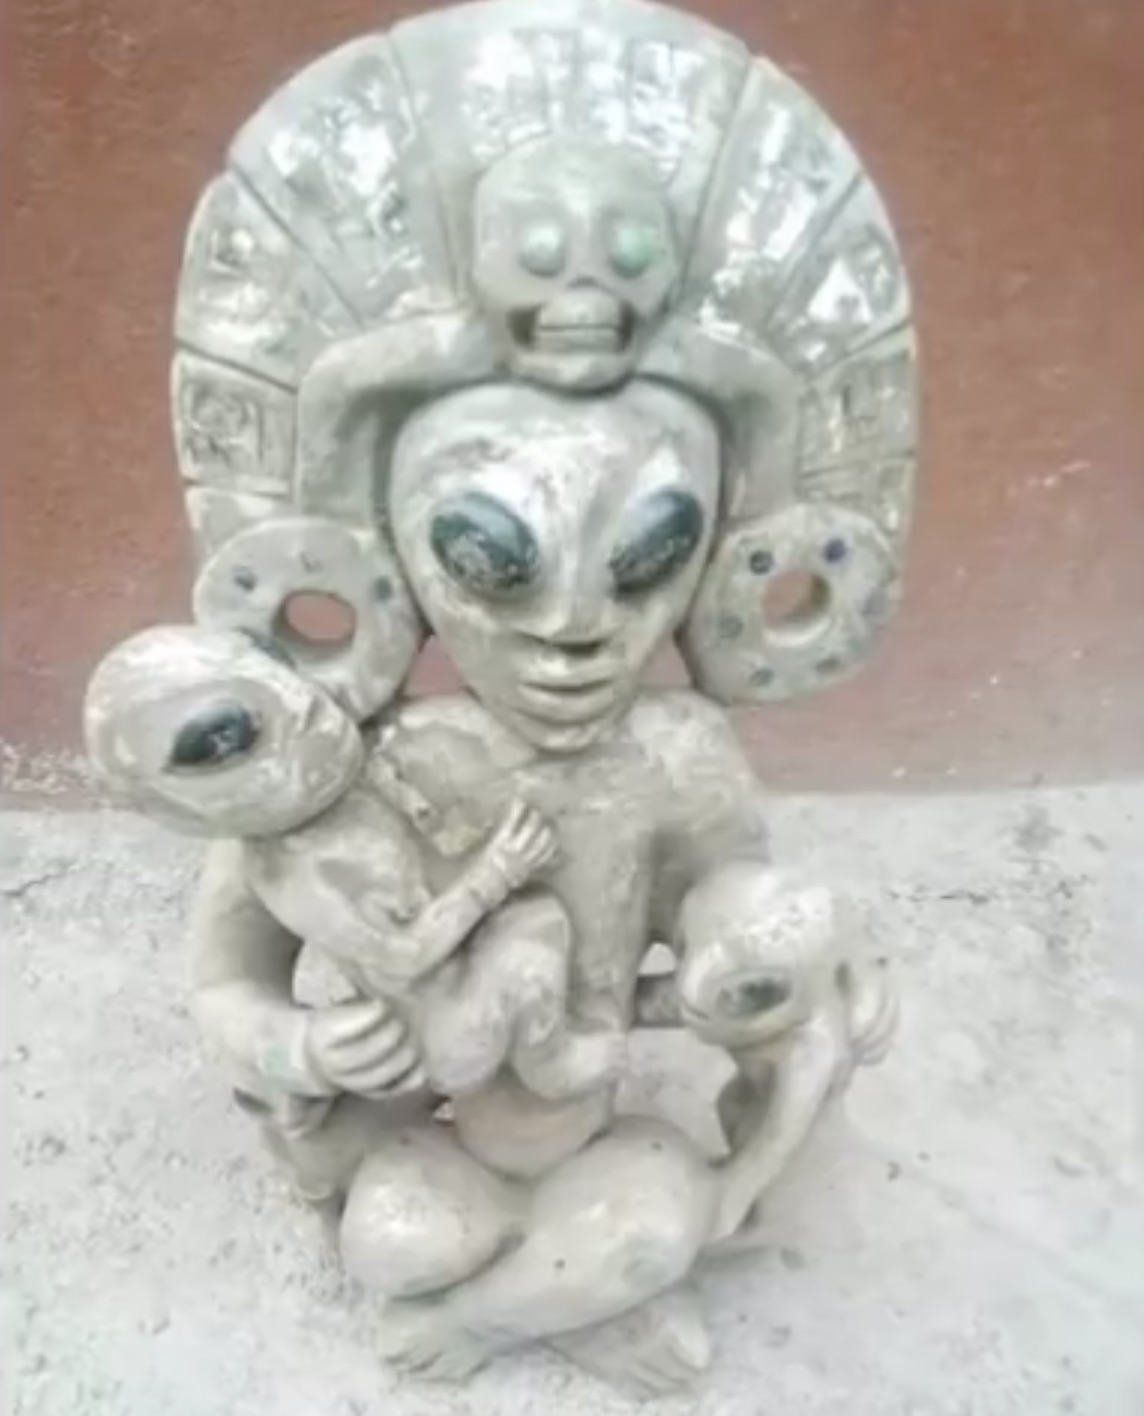 BONUS: a figurine found in a cave in Mexico.